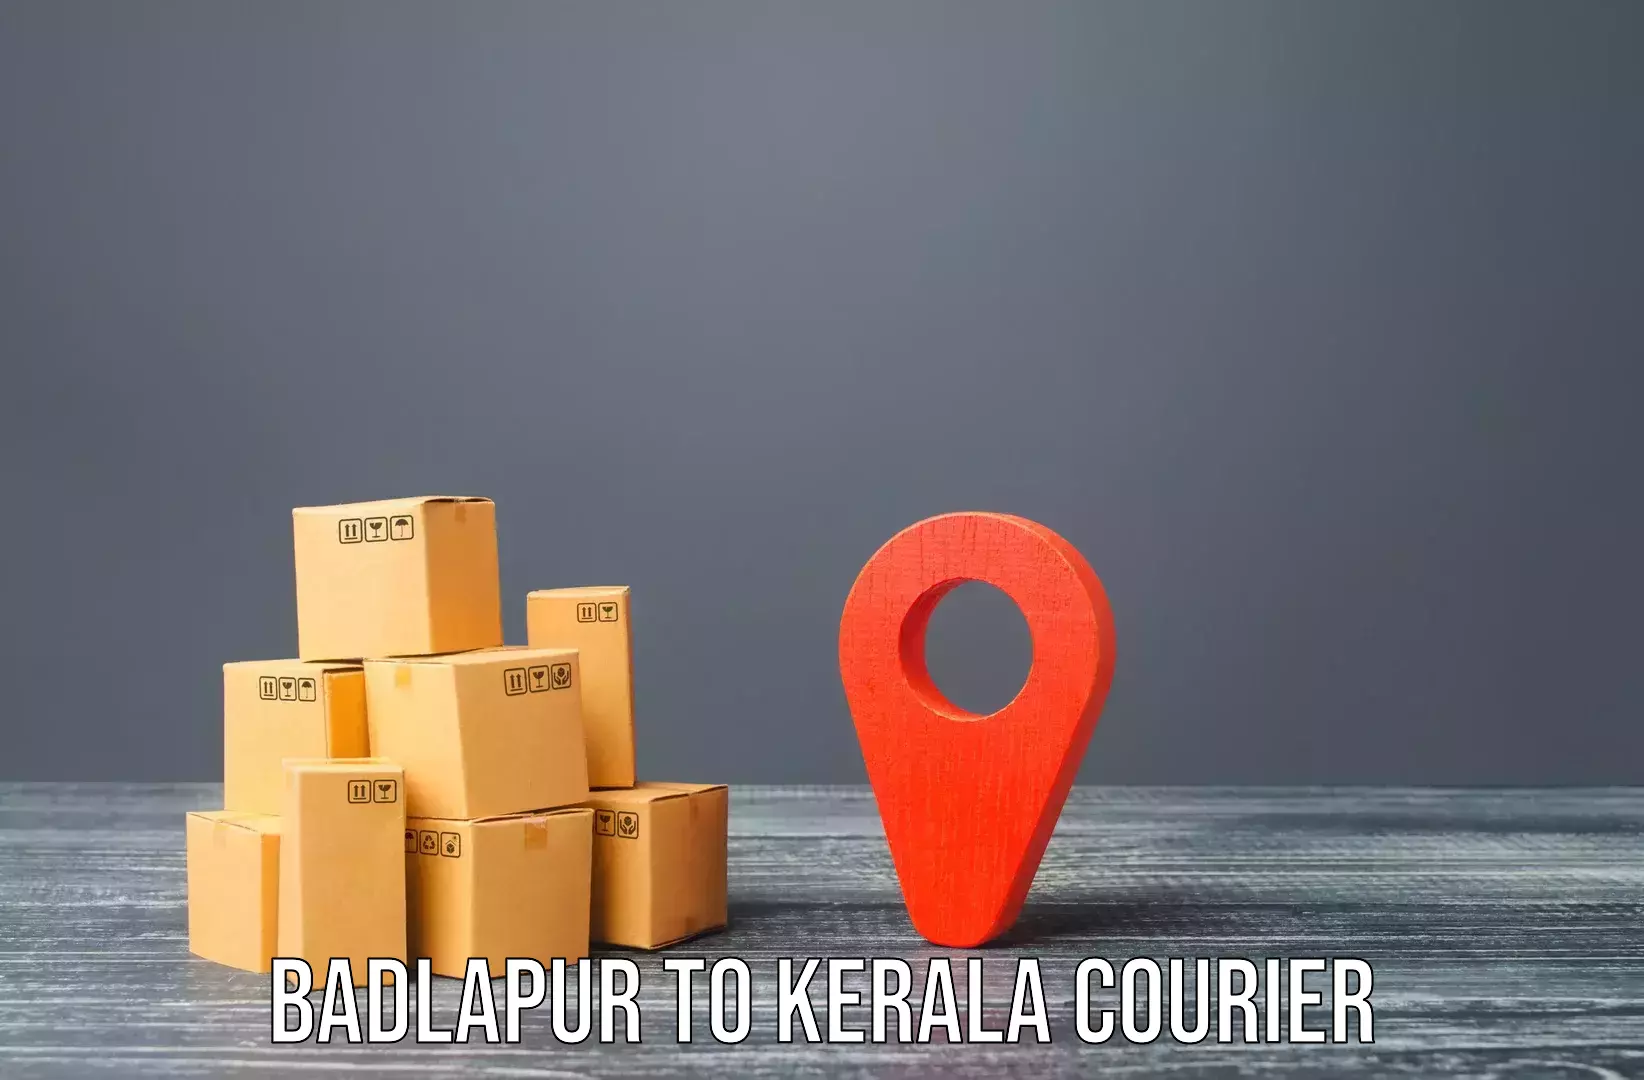 Furniture delivery service Badlapur to Akaloor